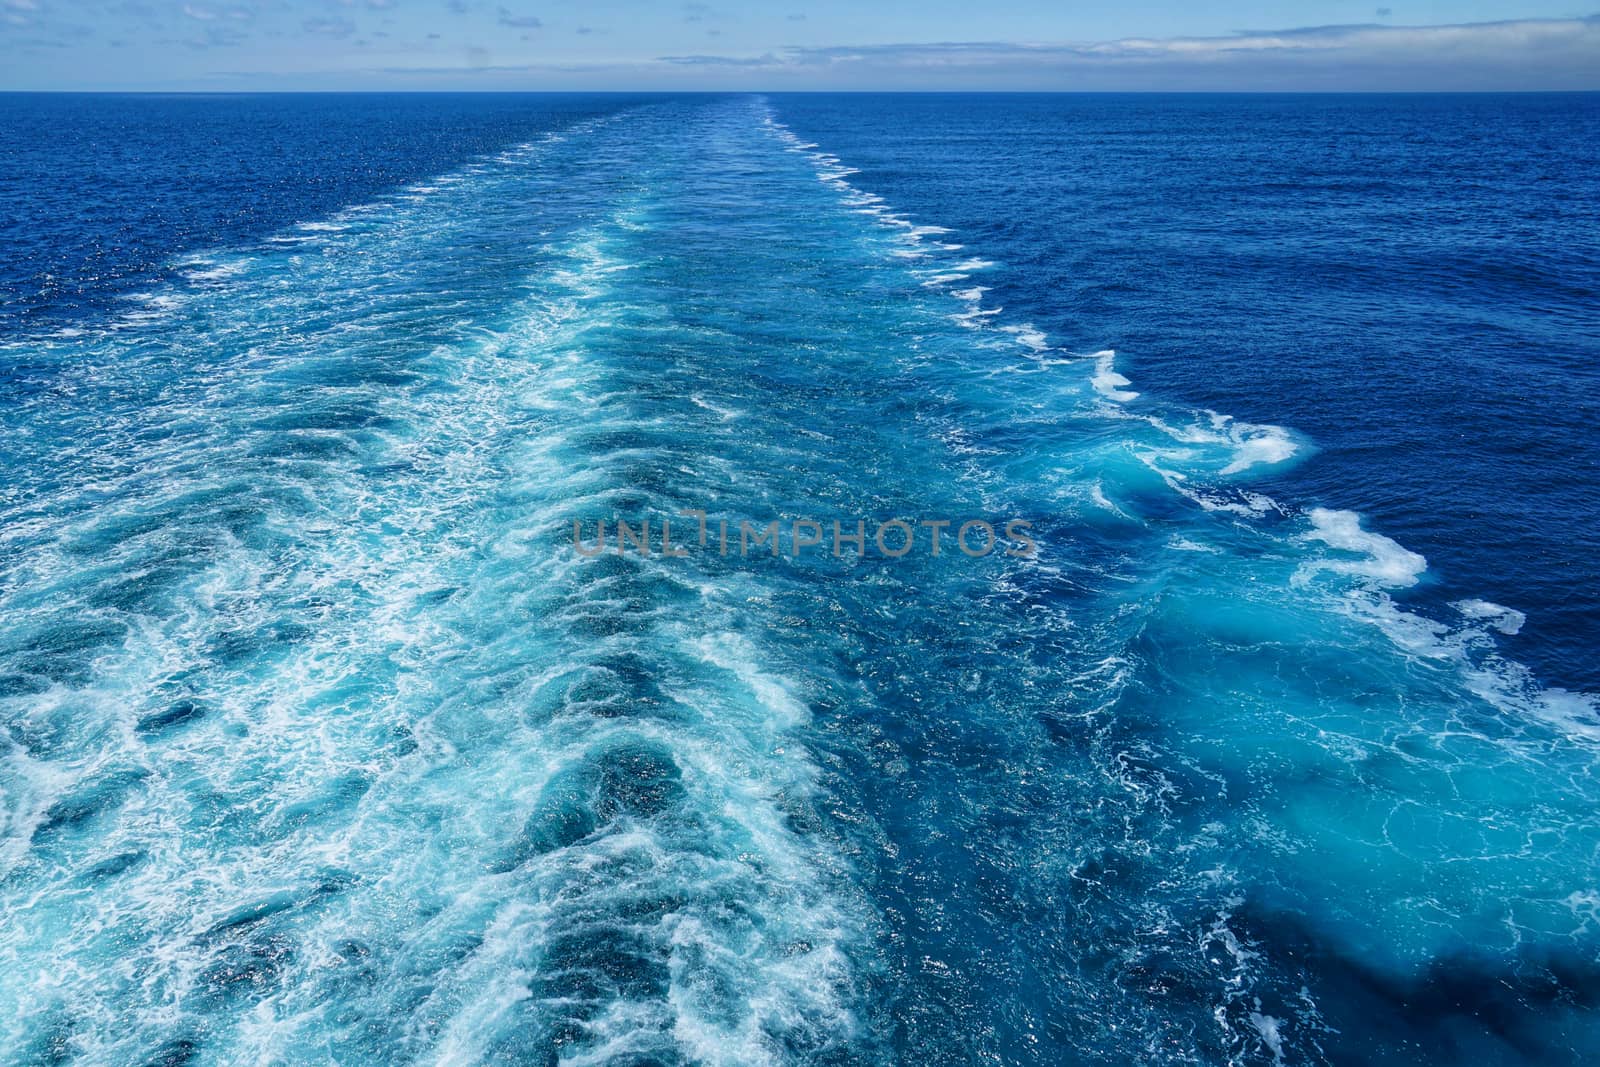 A Cruise ship wake on a beautiful sunny day  by Jshanebutt